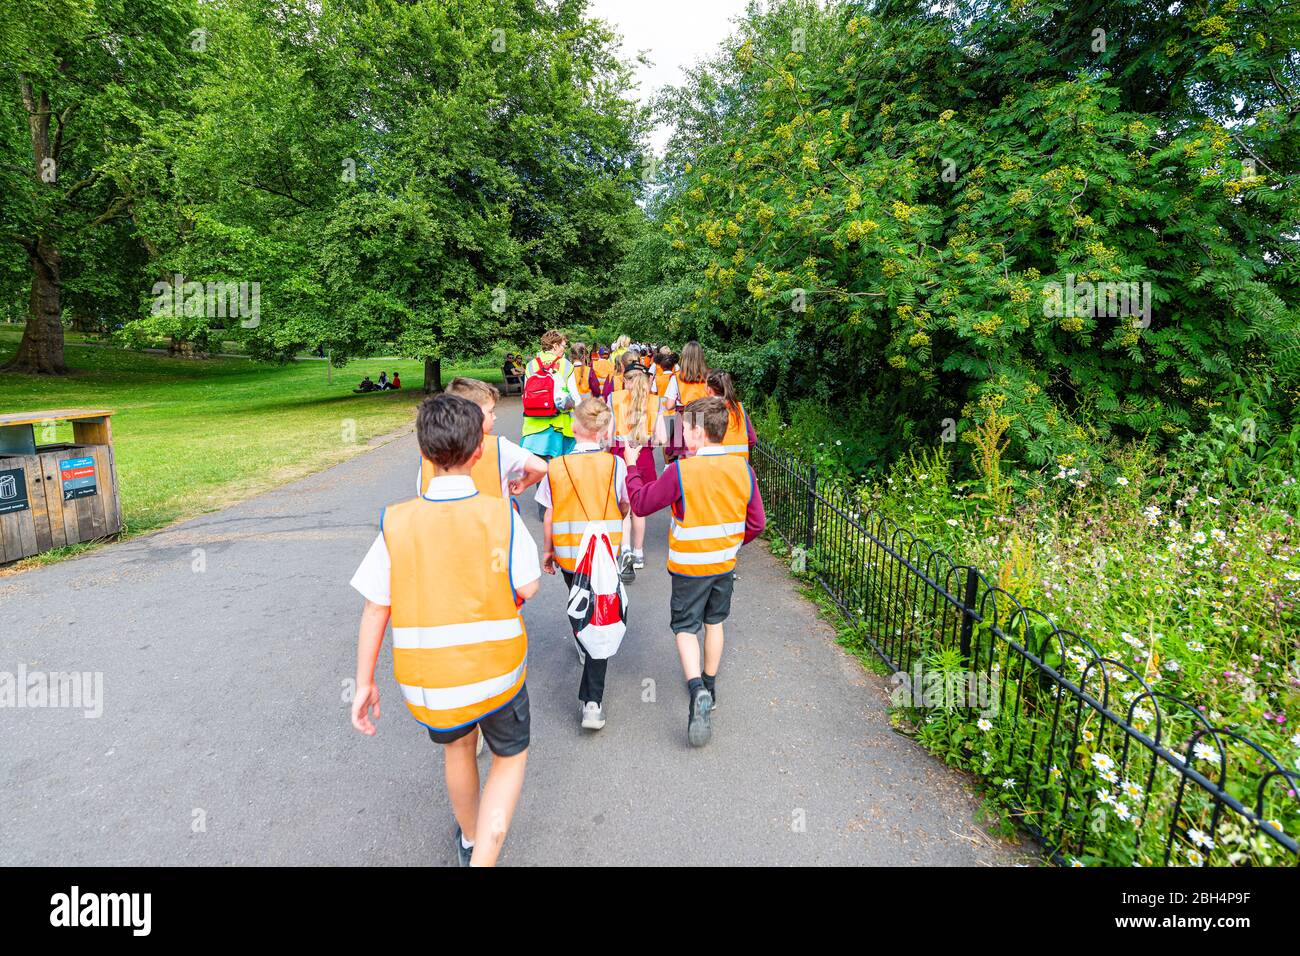 London, UK - June 21, 2018: St James Park green trees in summer with many crowd of people school children walking on sidewalk road on field trip in ve Stock Photo